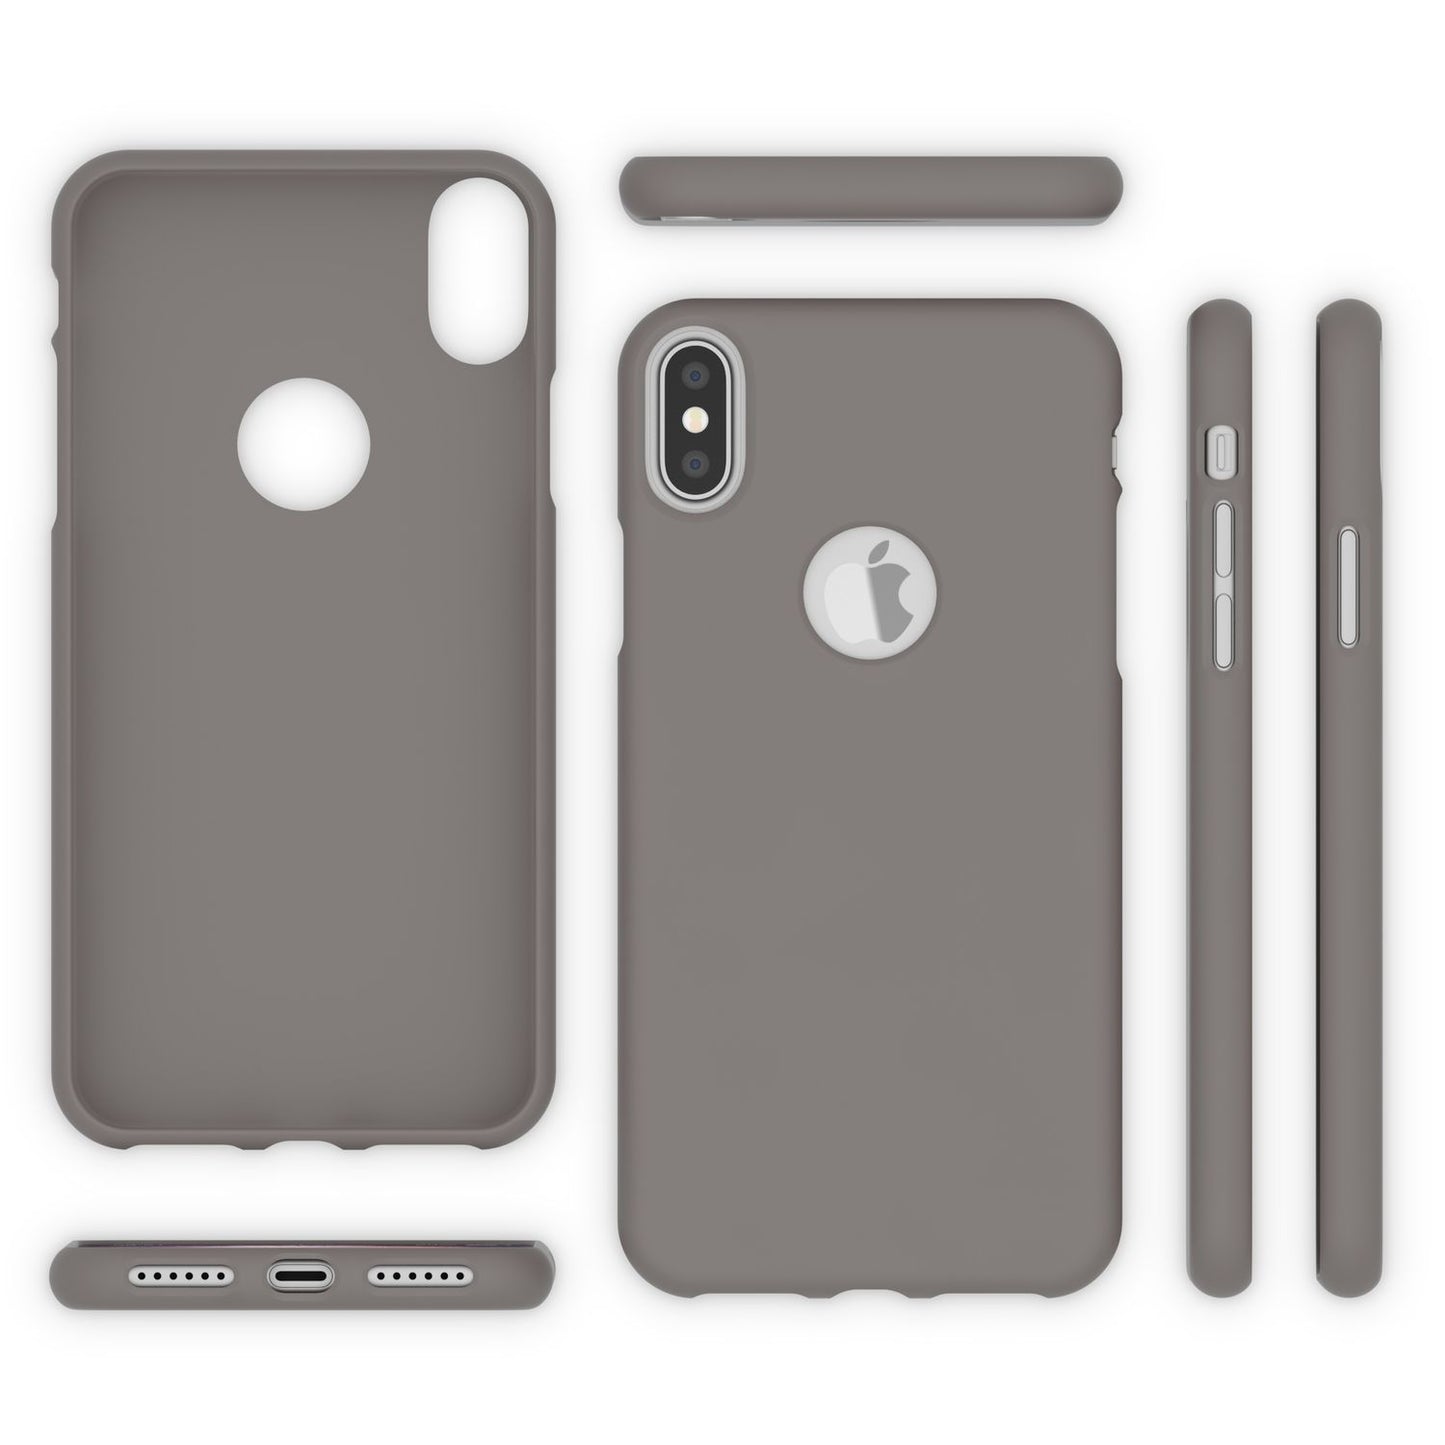 NALIA Handyhülle für Apple iPhone XS Max, Ultra-Slim TPU Hülle Silikon Neon Case